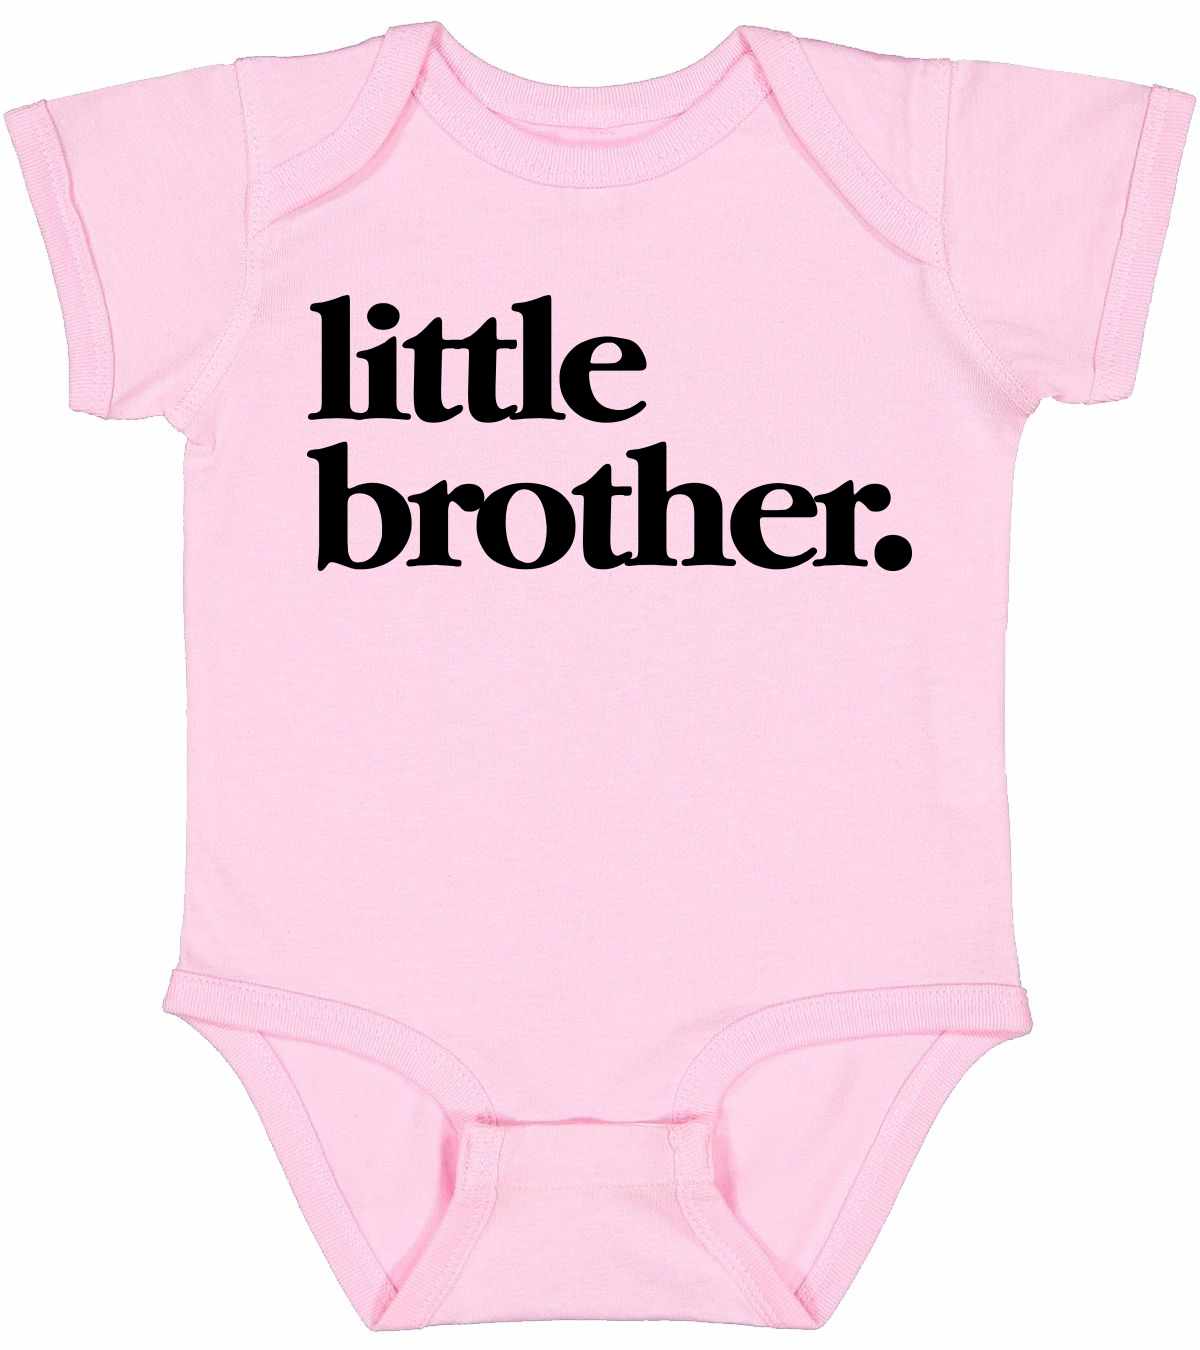 Little Brother on Infant BodySuit (#1322-10)